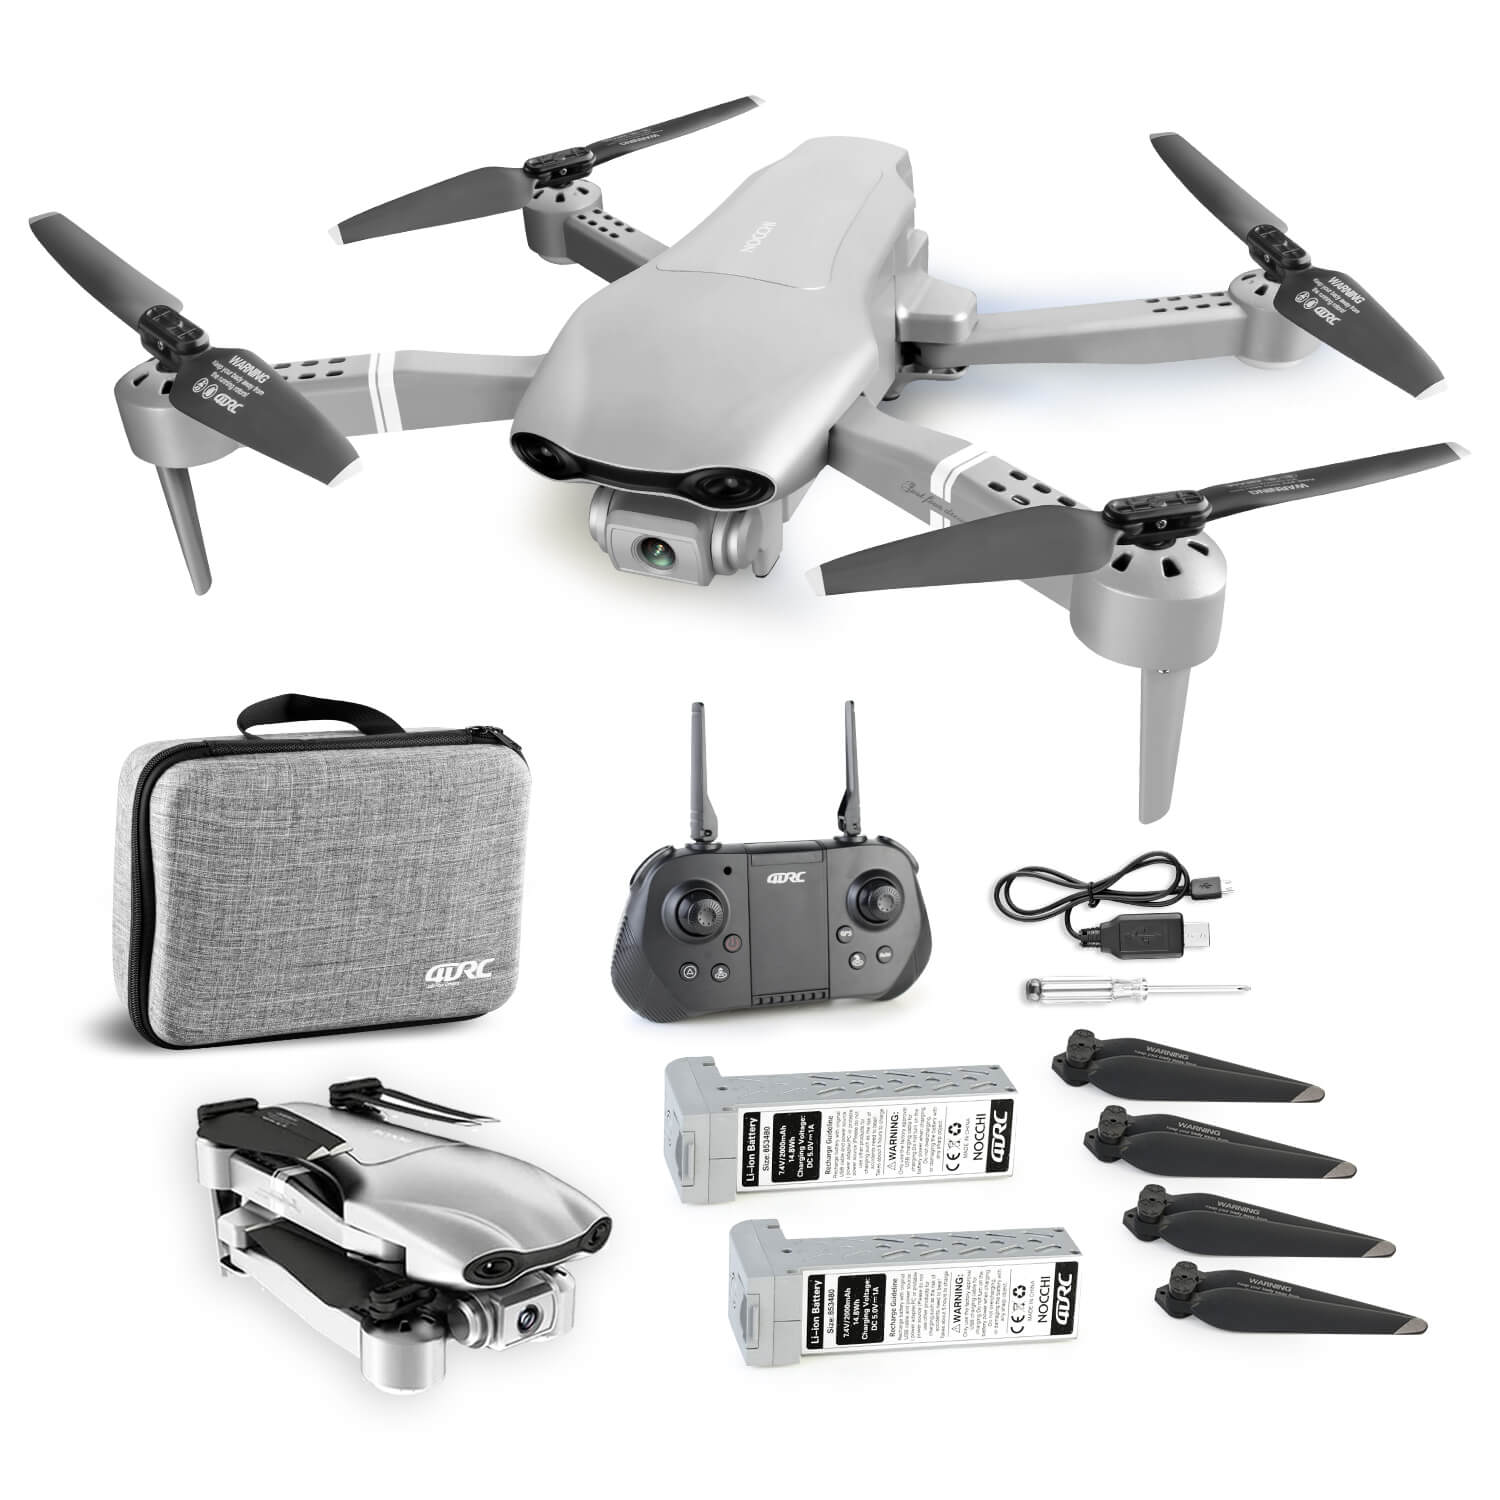 Leeg de prullenbak Voornaamwoord Koninklijke familie 4DRC 4D-F3 GPS Drone with 4K Camera for Adults